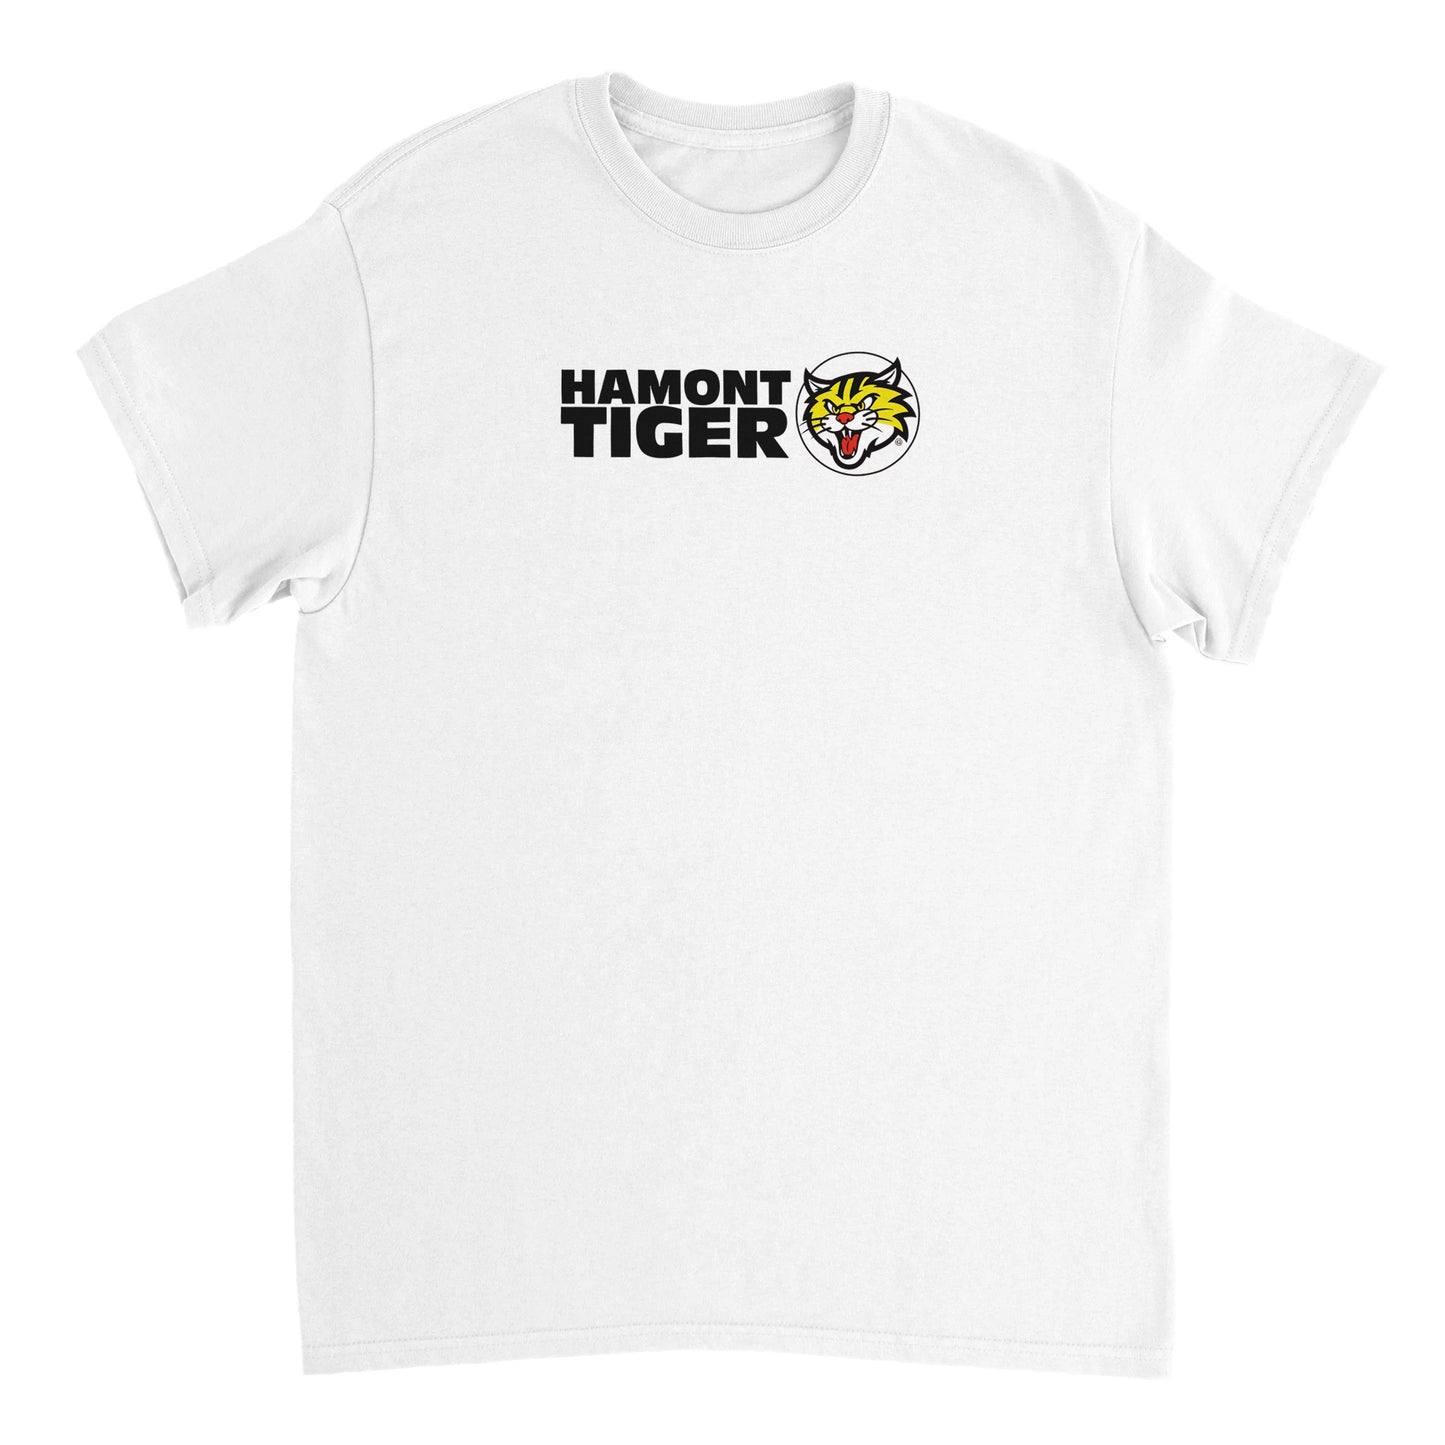 HamOnt Tiger T-shirt